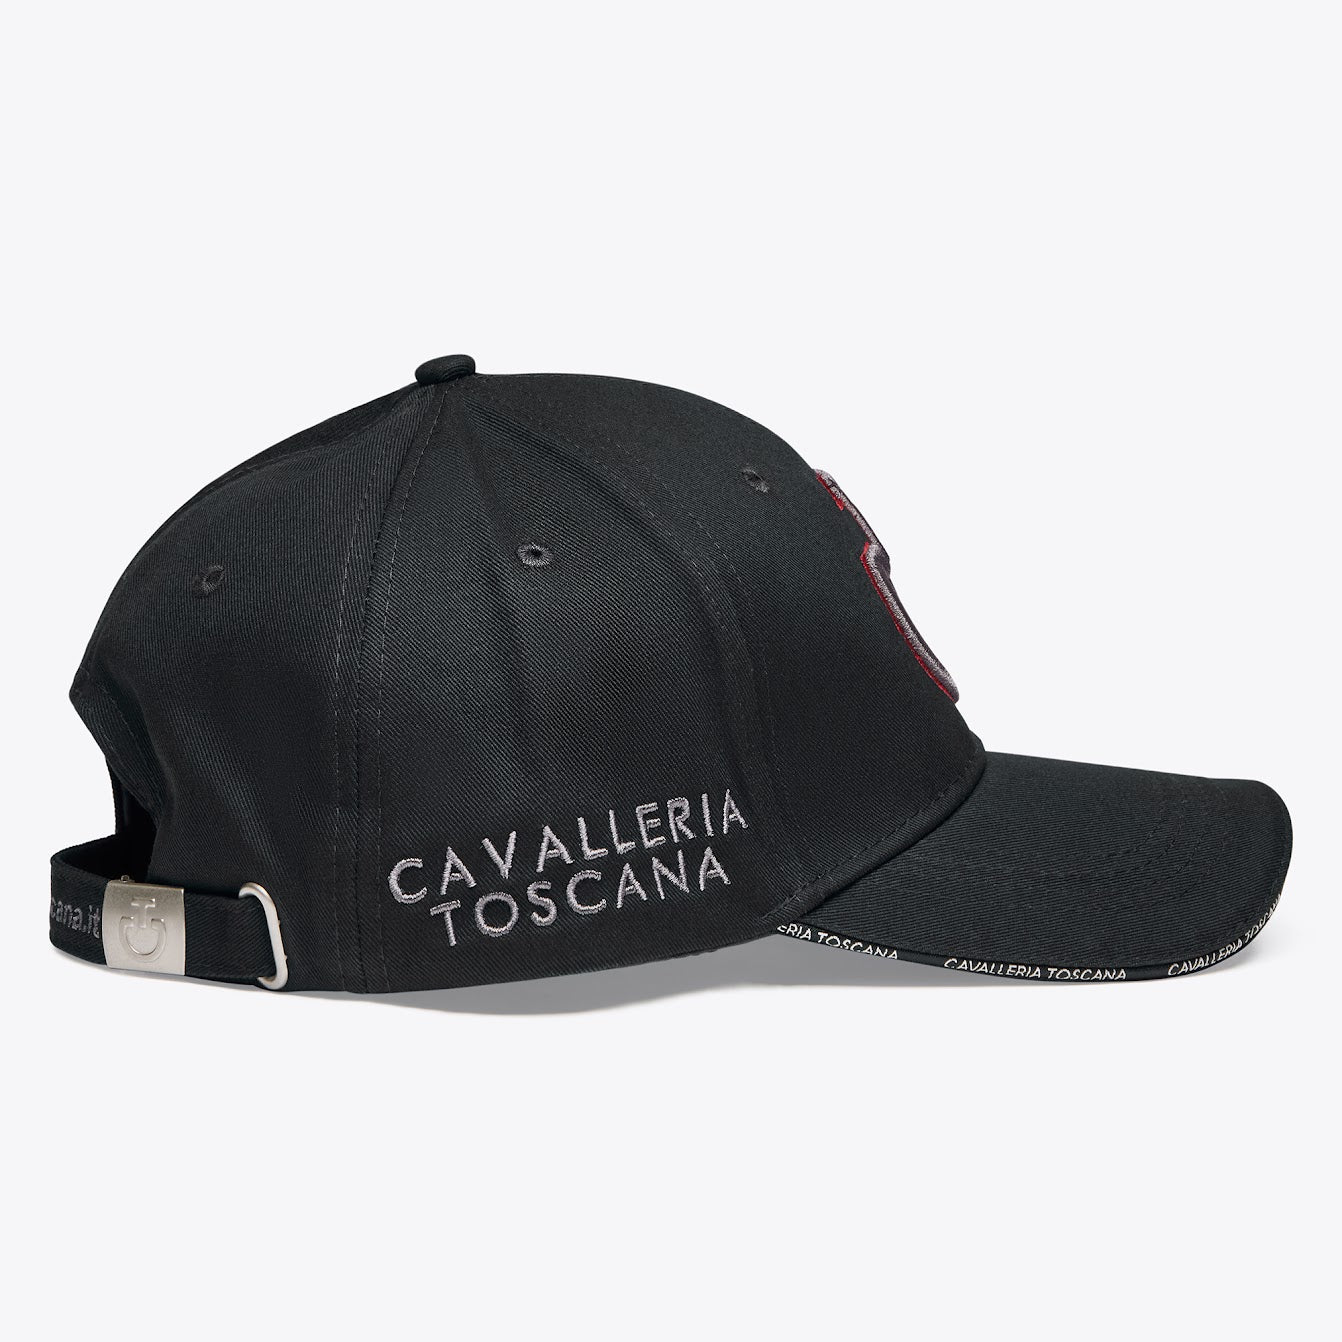 Cavalleria Toscana Embroidered Baseball Cap